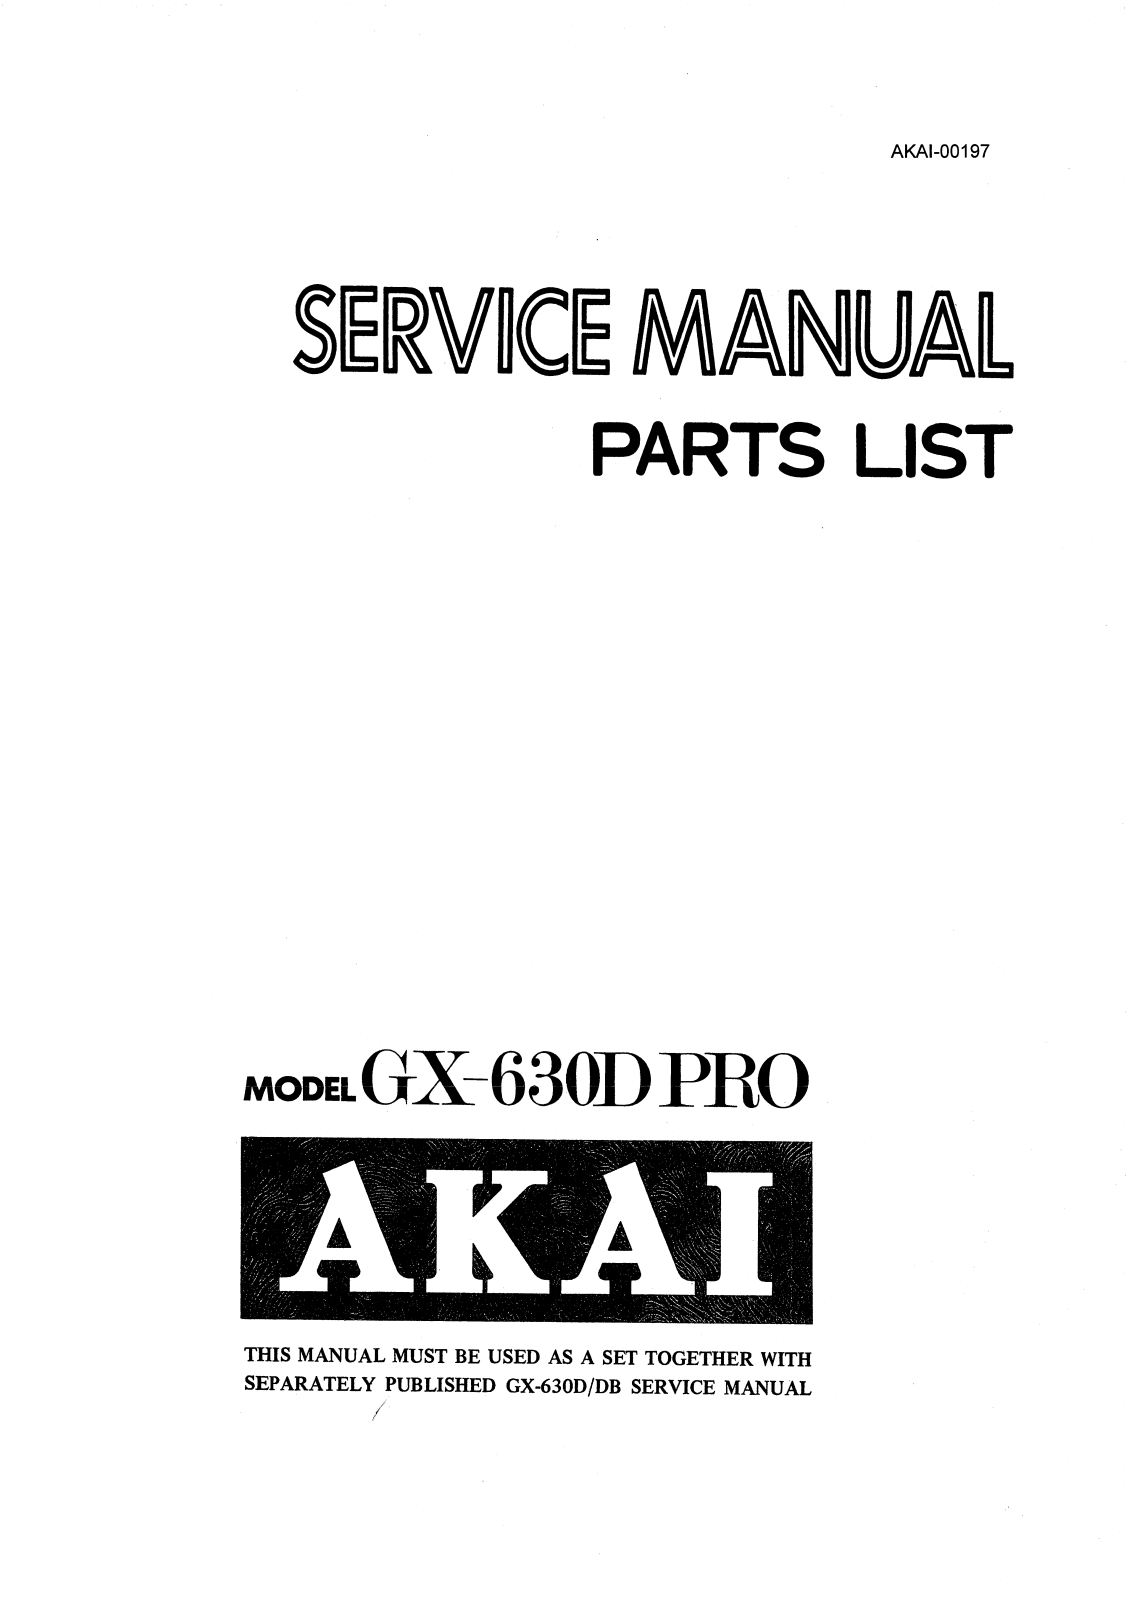 Akai GX-630-DPRO Service manual